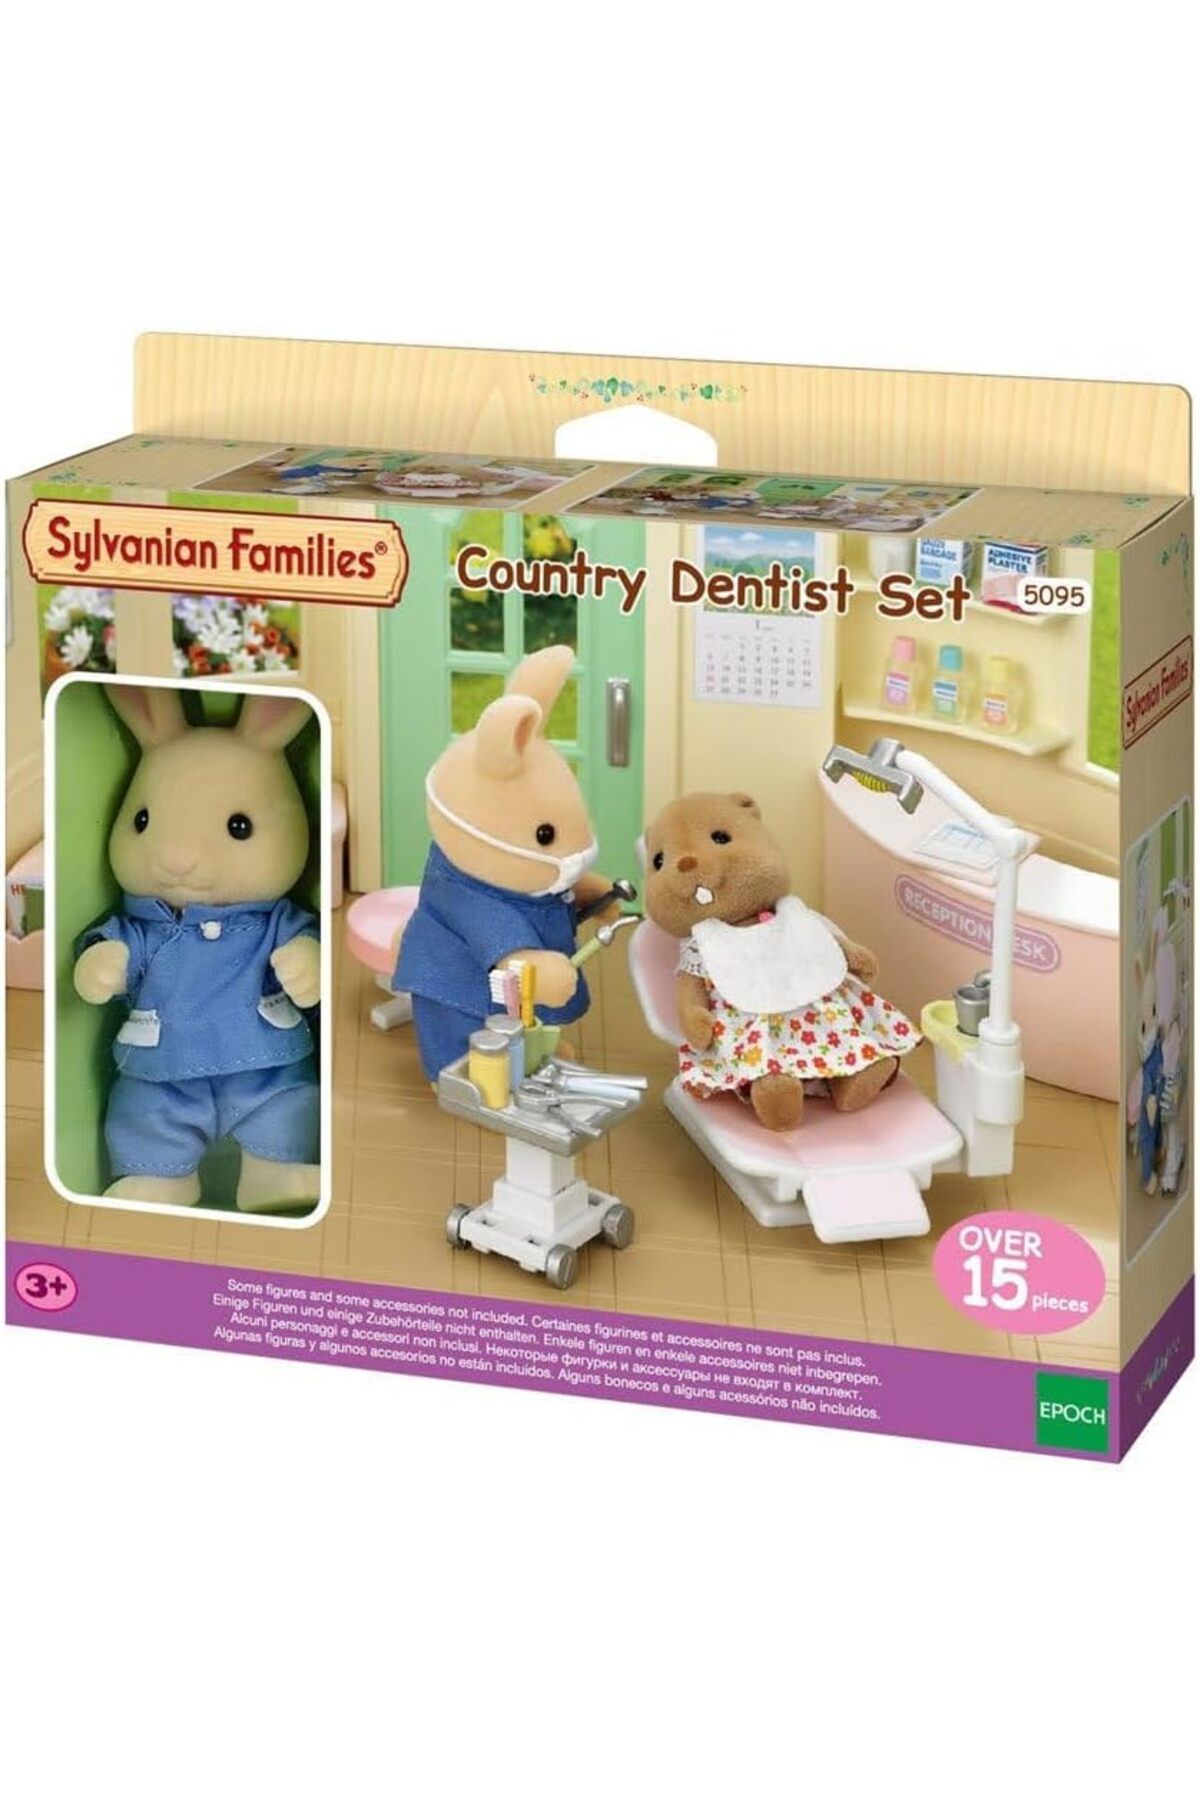 Tower Toys Sylvanian Families 5095 Country Dentist Set Dişçi Seti